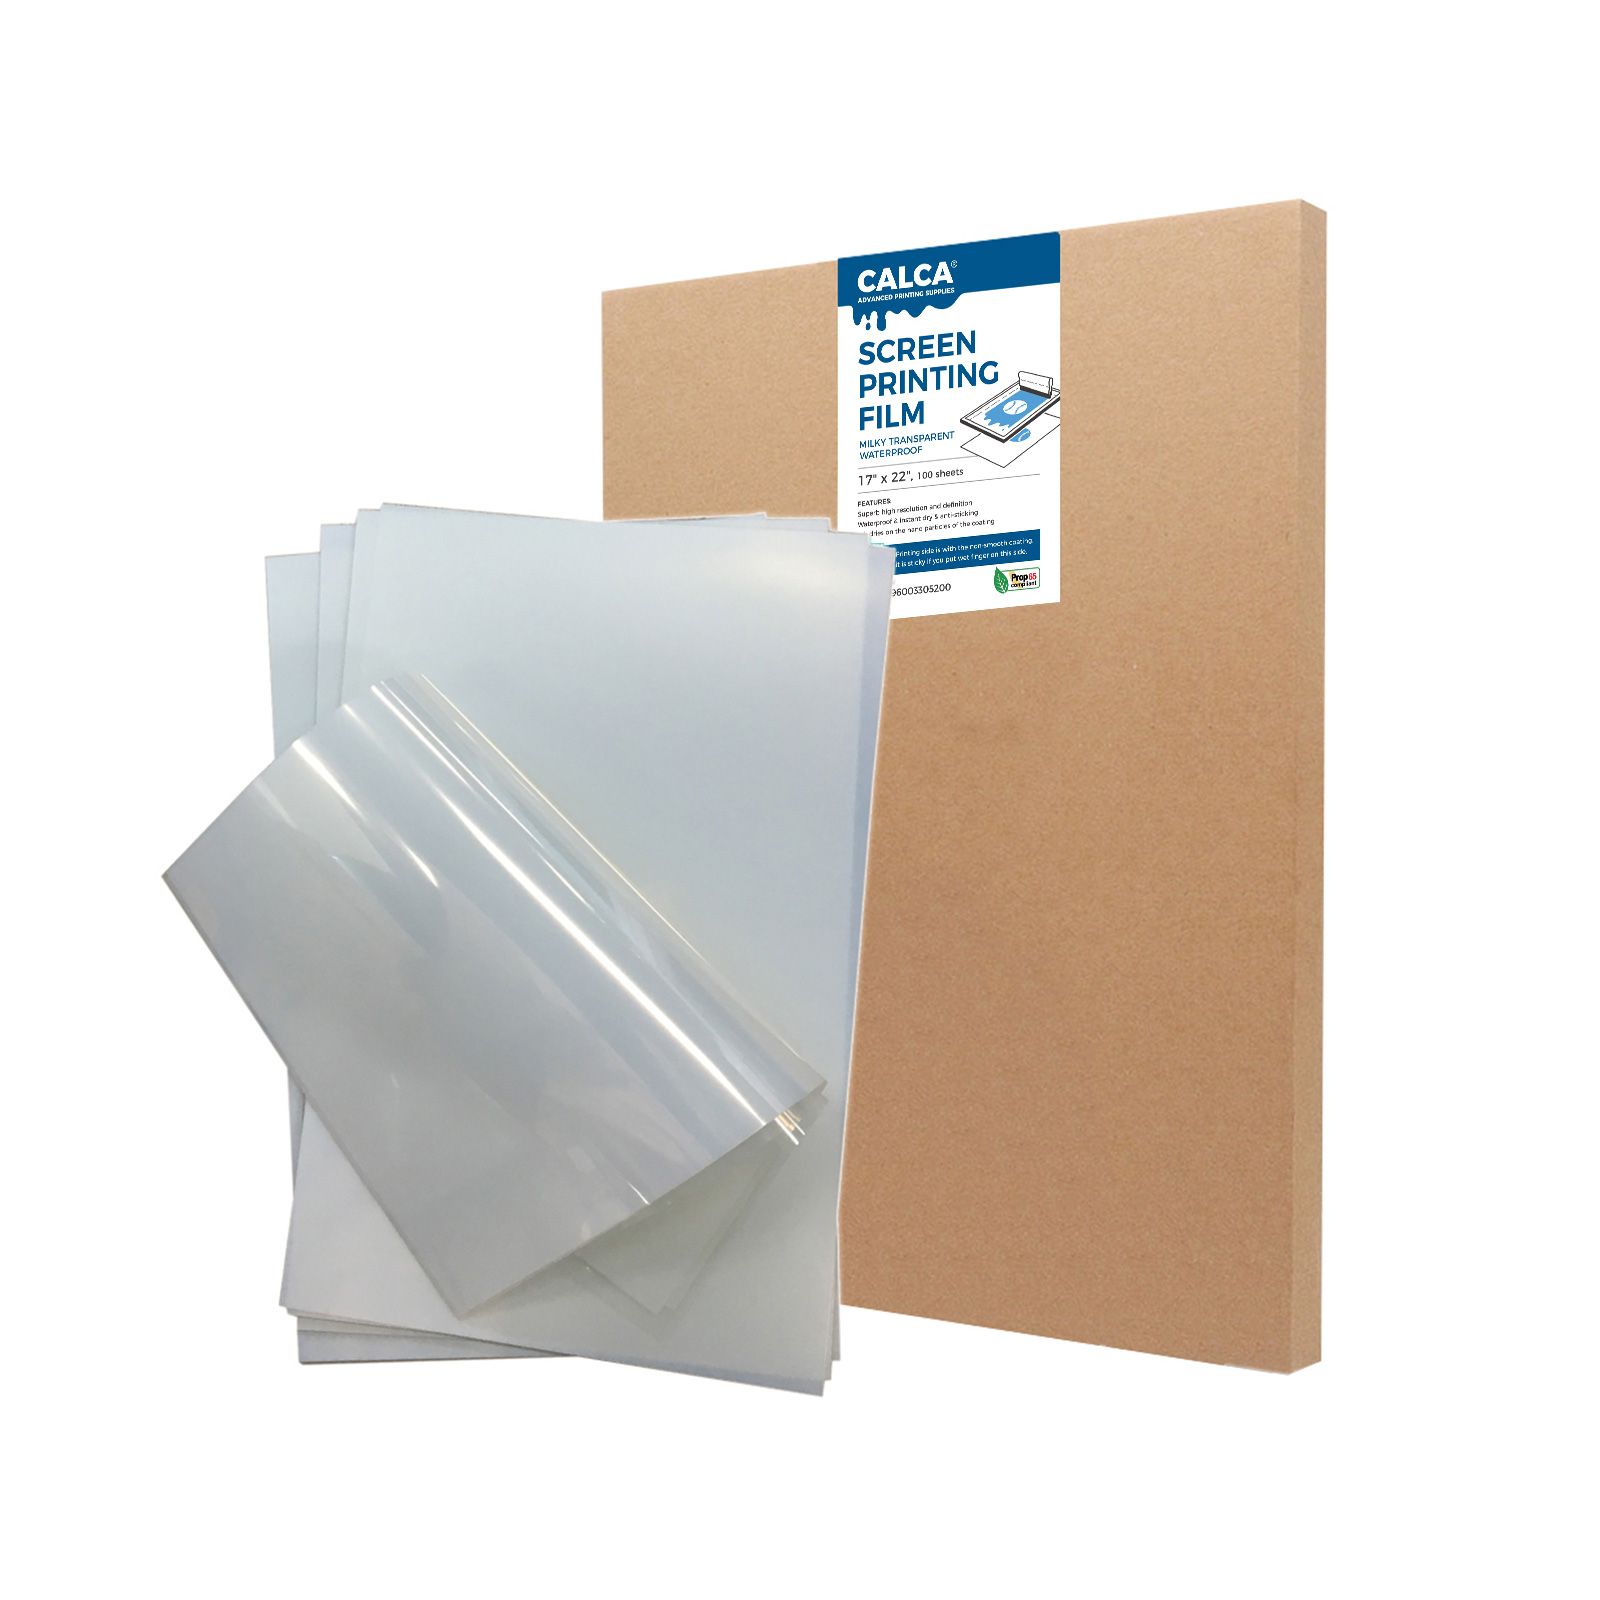 CALCA 100 Sheets/pack Premium Waterproof Inkjet Milky Transparency Film 17" x 22" for Screen Printing